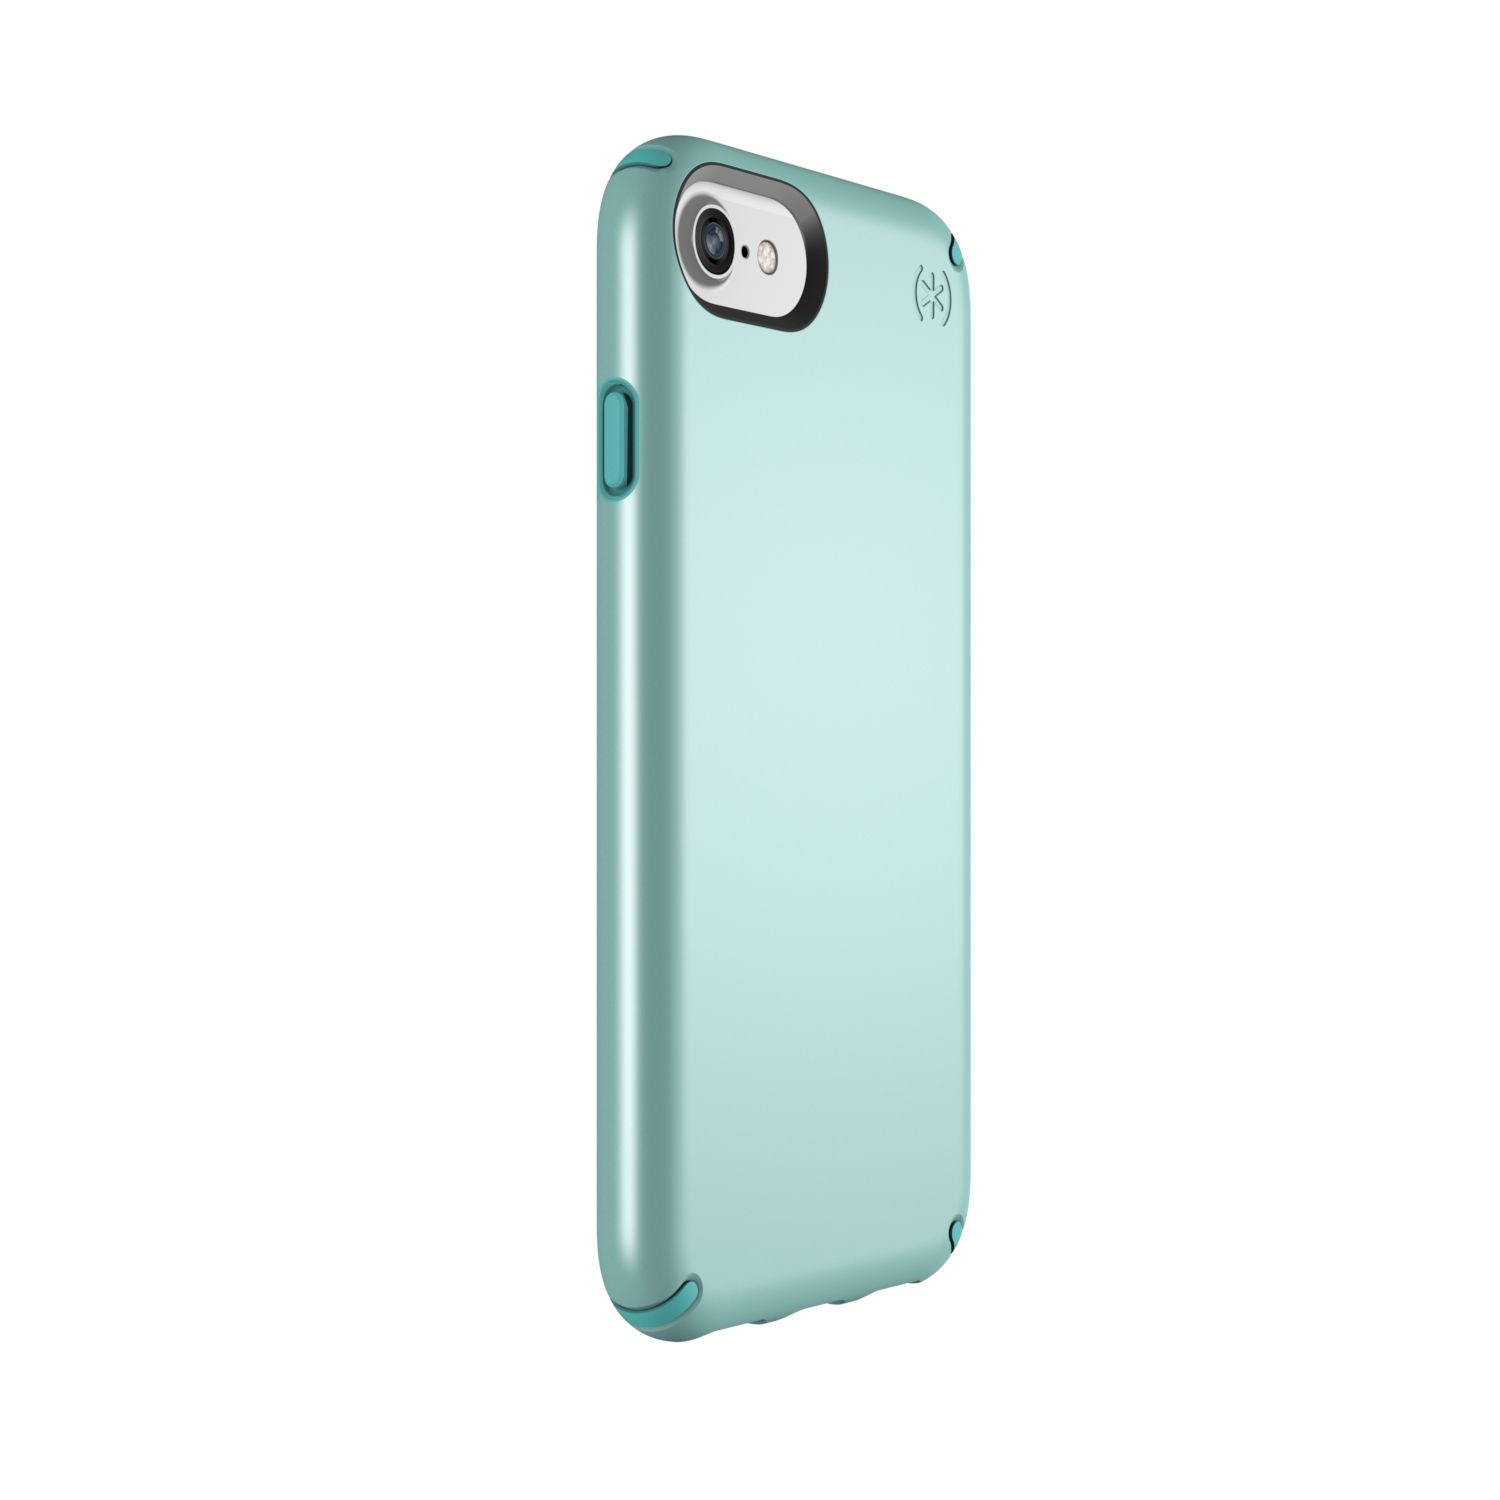 Presidio Metallic iPhone 8, iPhone 7, iPhone 6s & iPhone 6 Cases